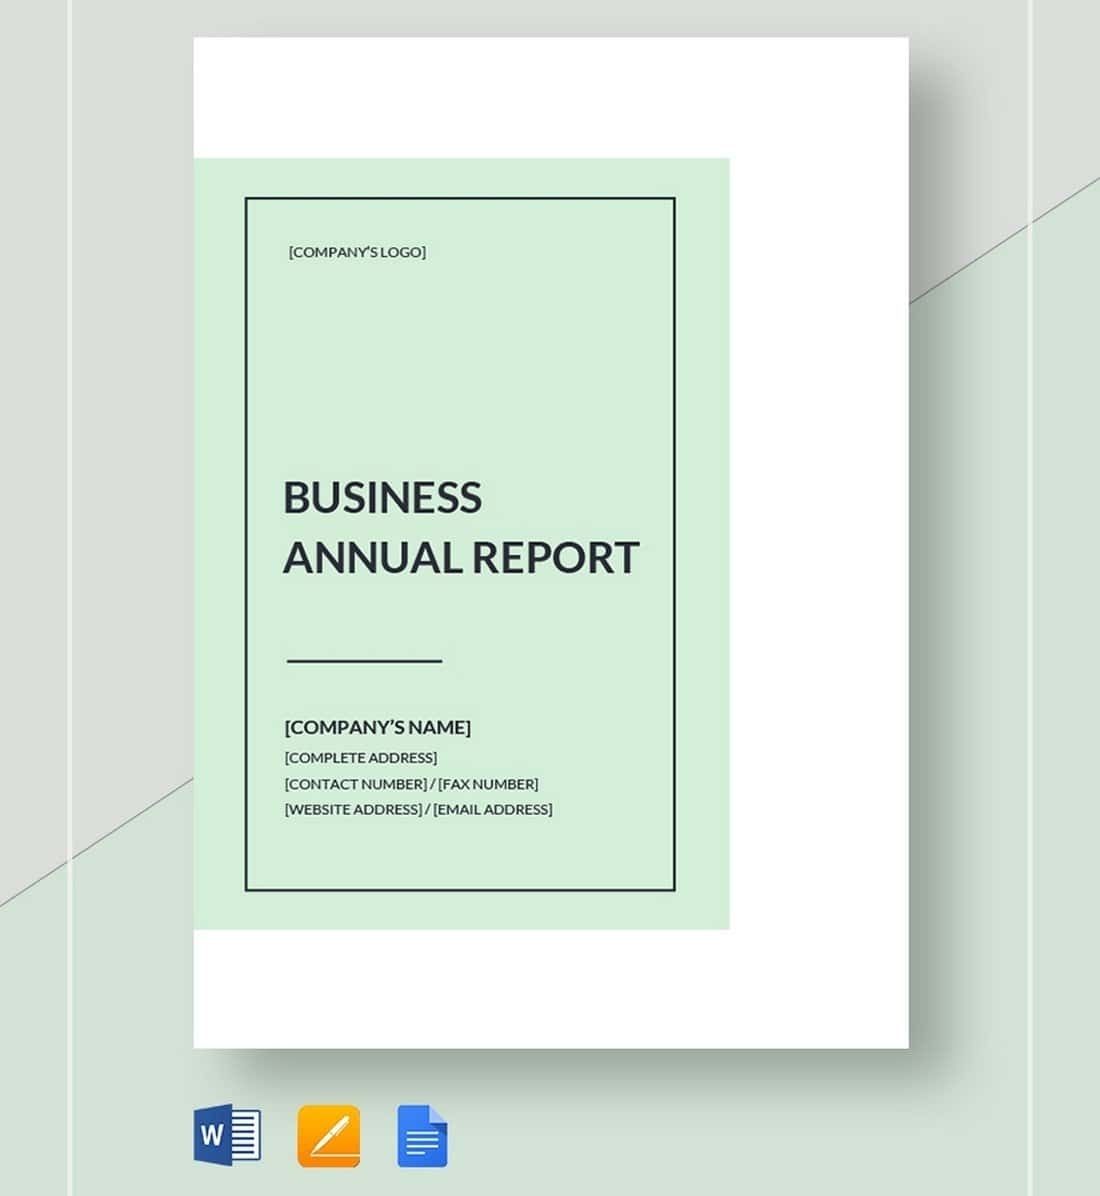 50+ Annual Report Templates (Word & Indesign) 2021 | Design Shack Throughout Annual Report Word Template